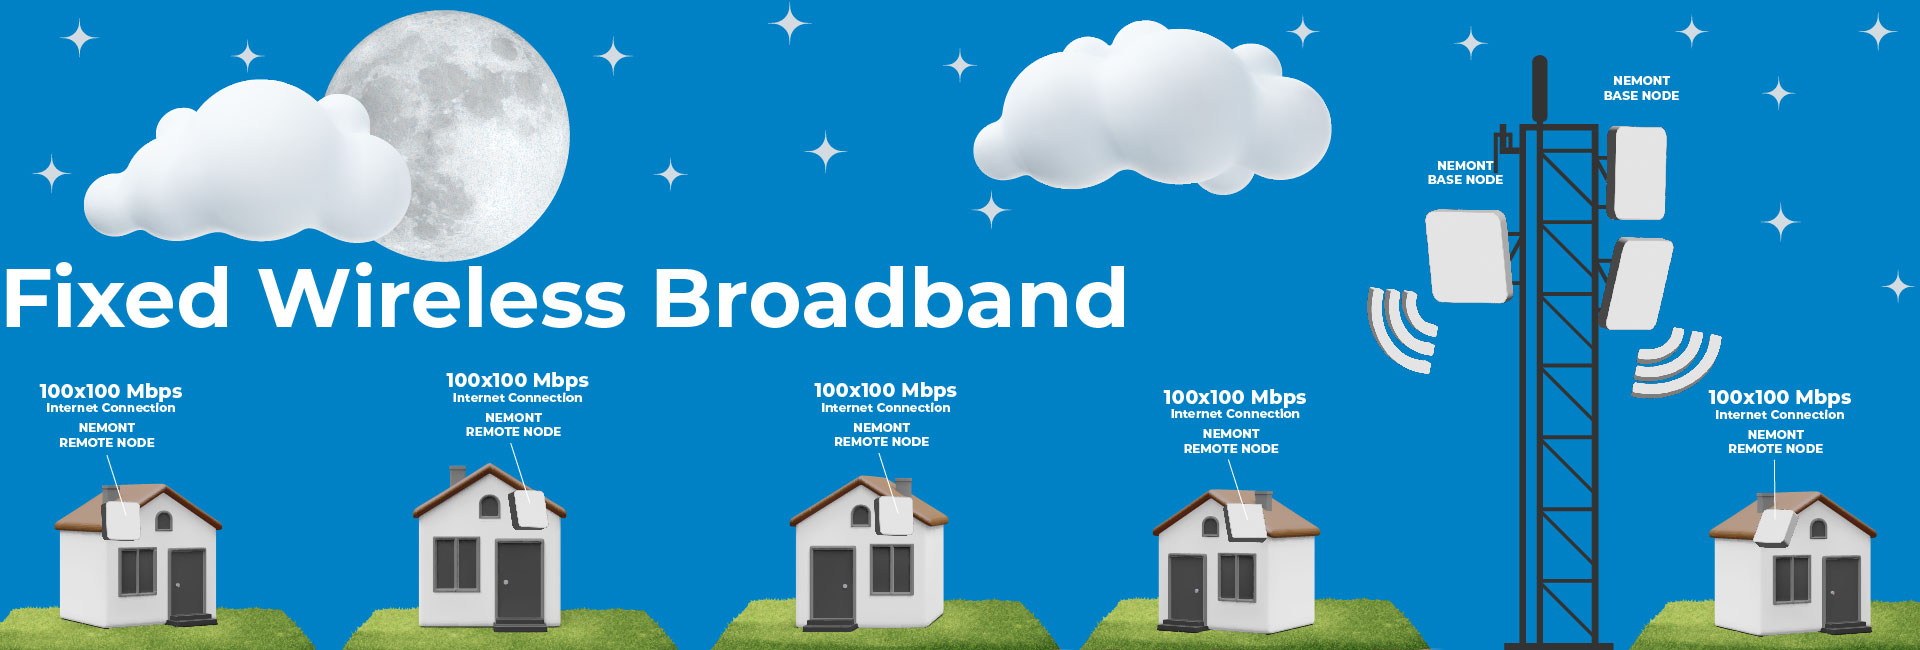 Fixed Wireless Broadband